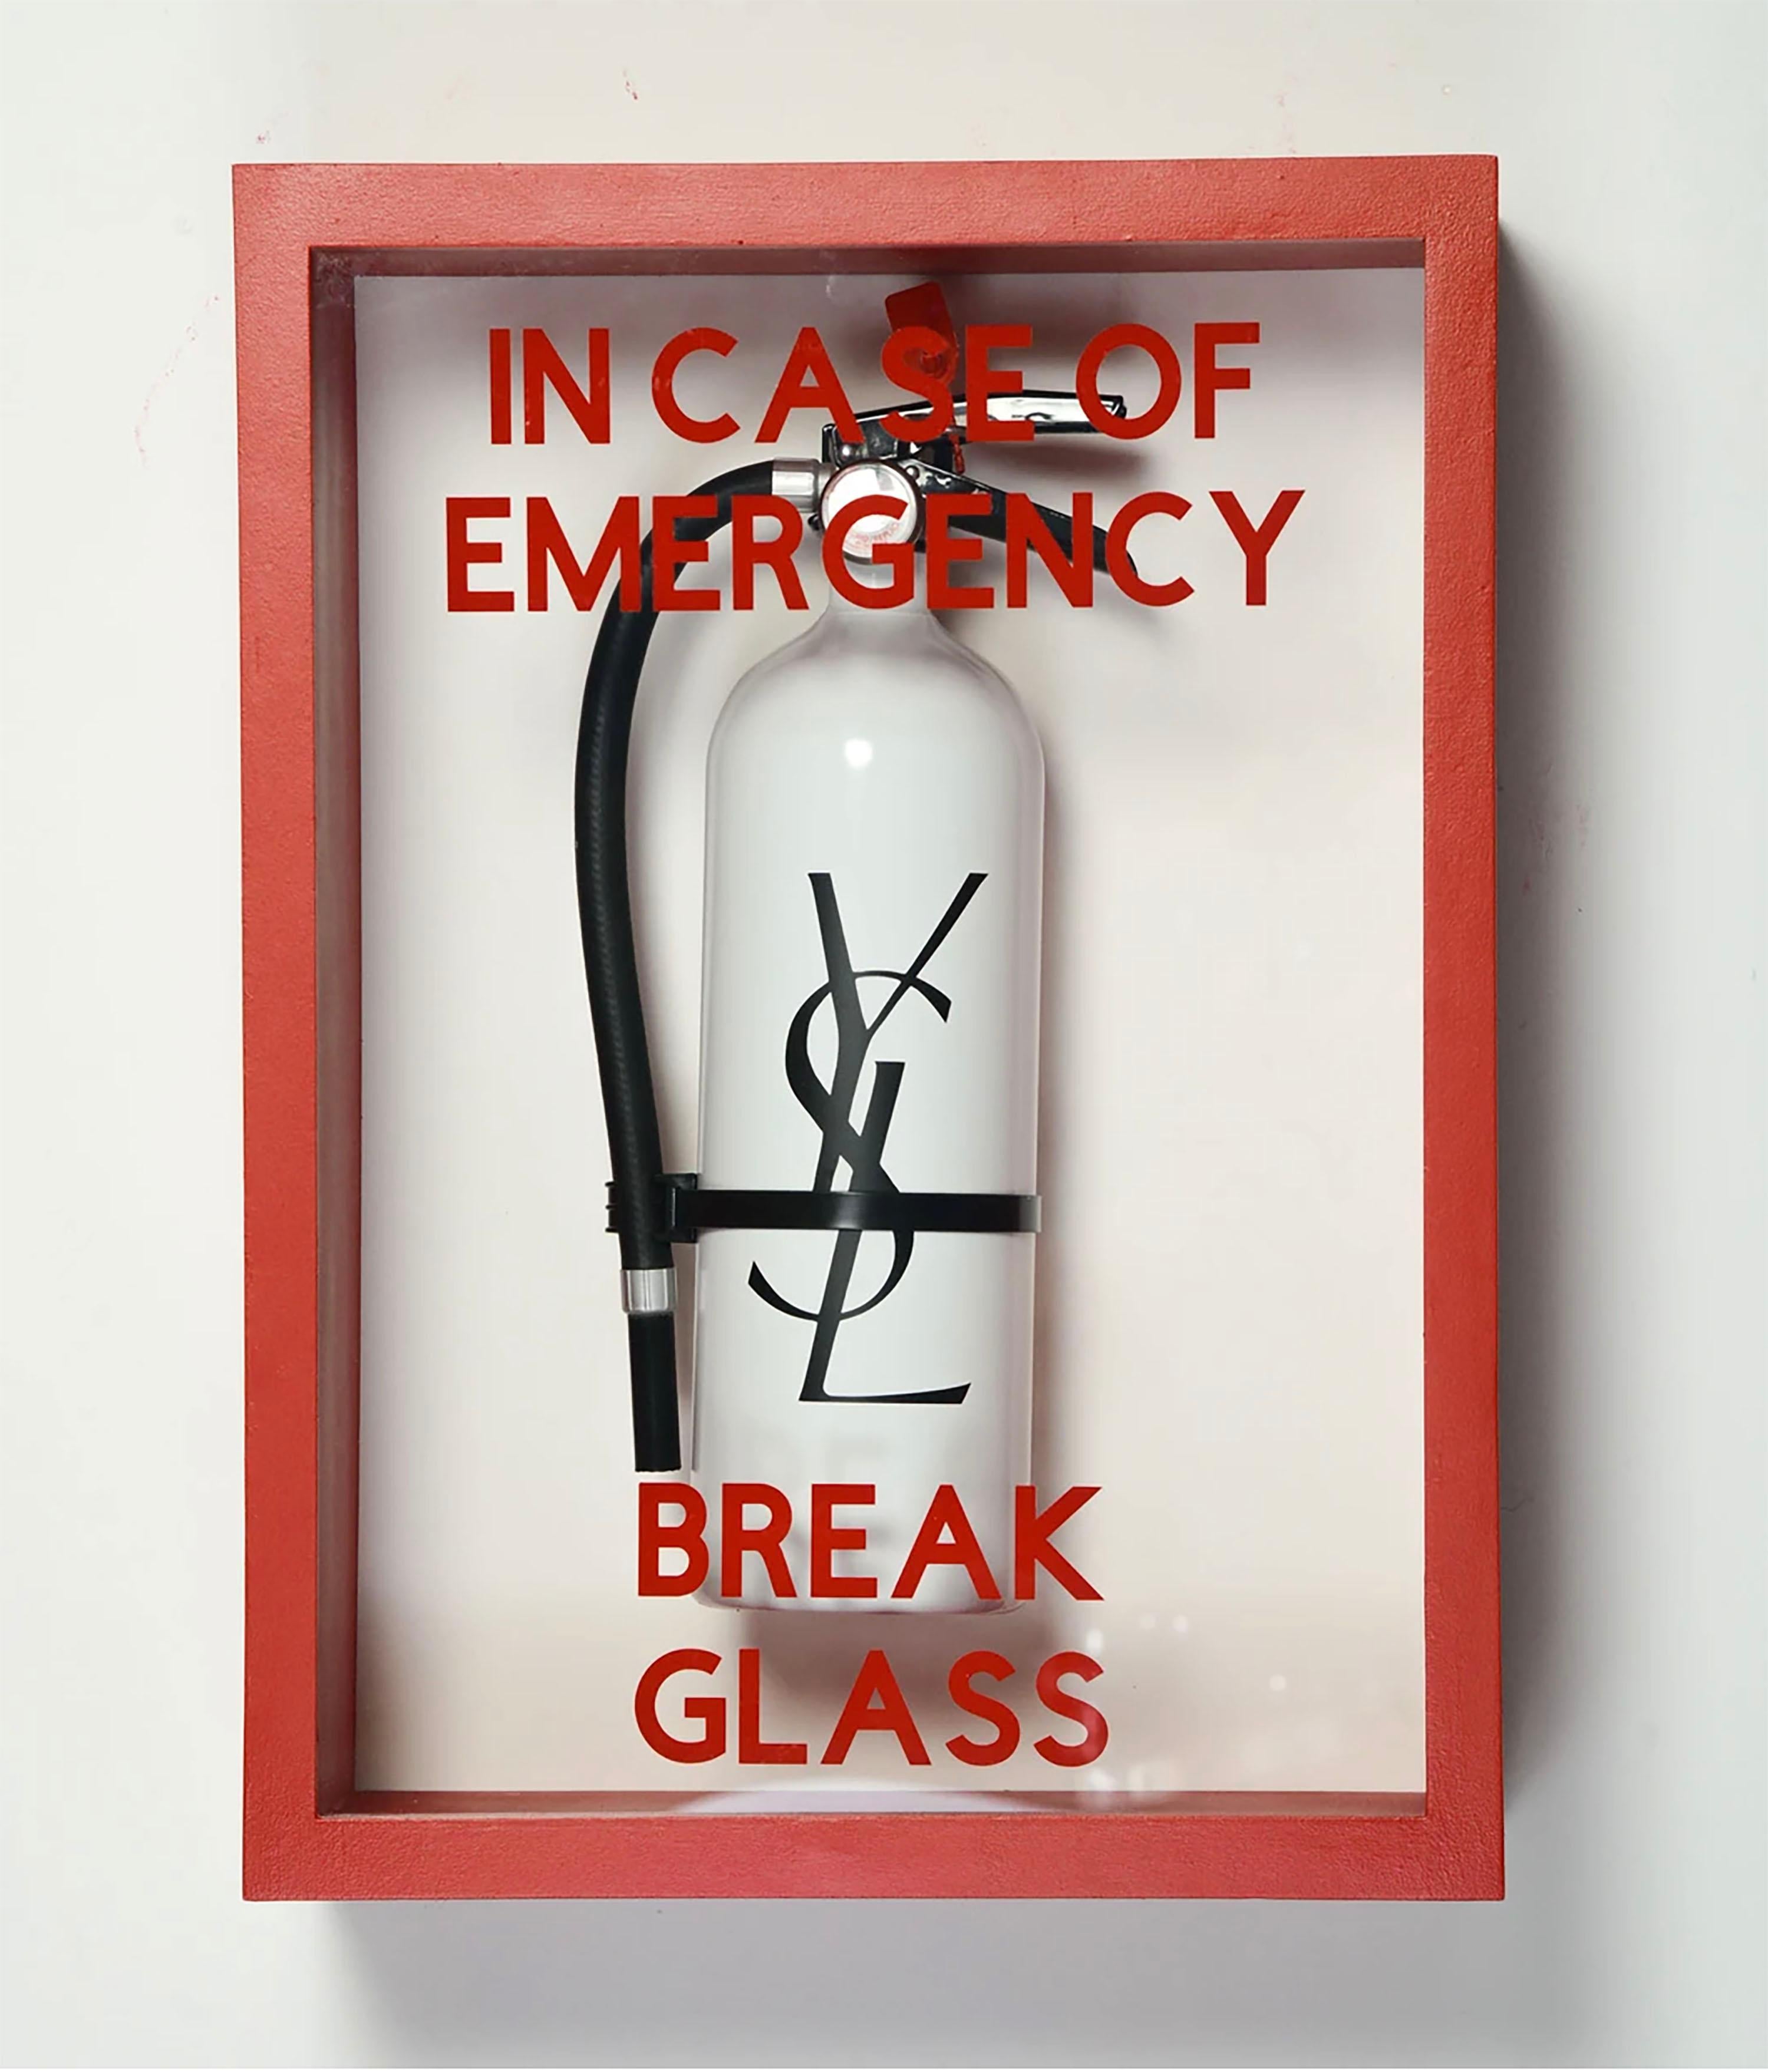 "In Case of Emergency Break Glass" YSL Luxury Brand Edition Fire Extinguisher 